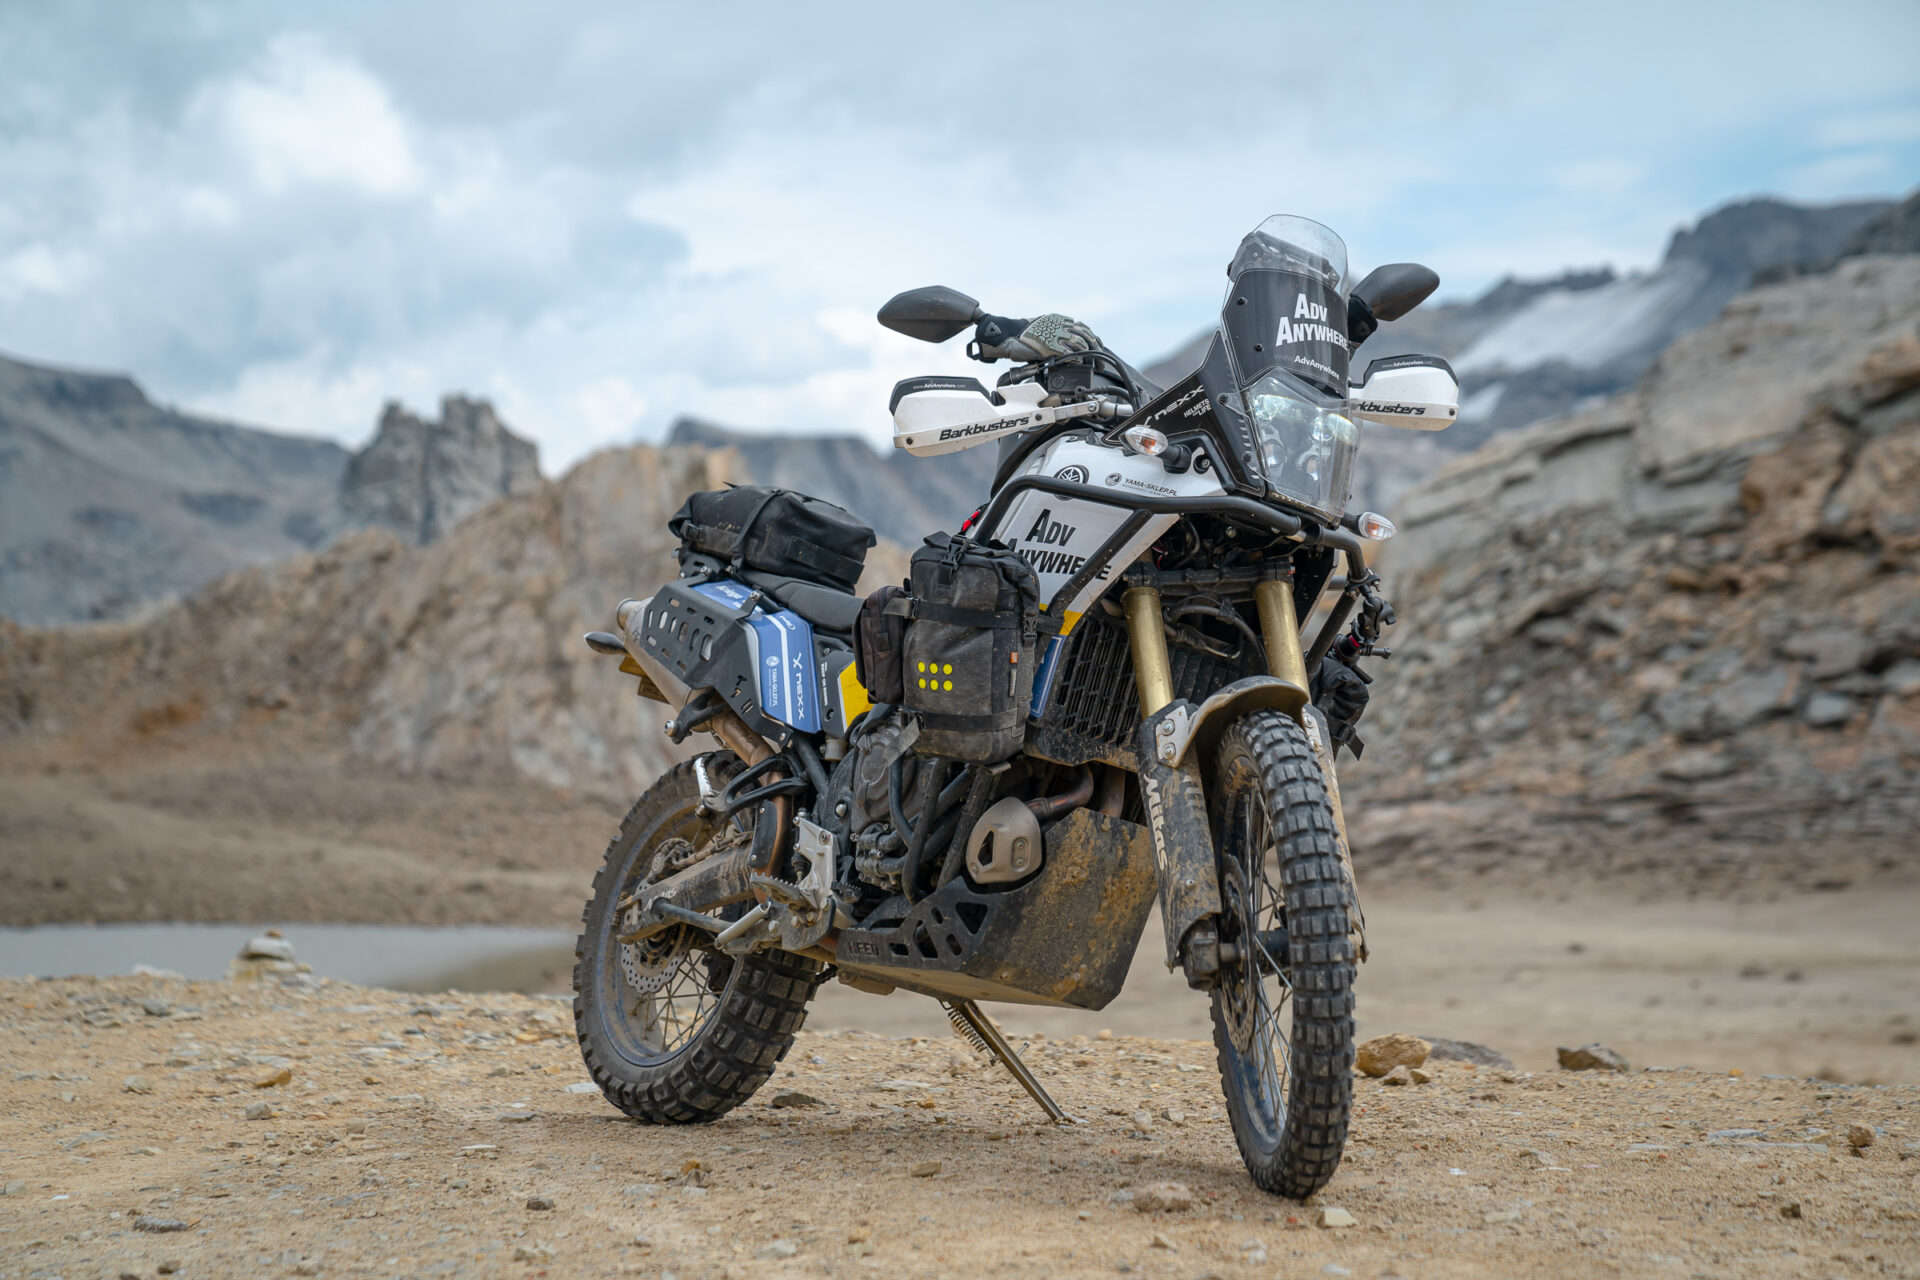 Review of the New Yamaha Ténéré 700 Adventure Bike - Petersen's Hunting